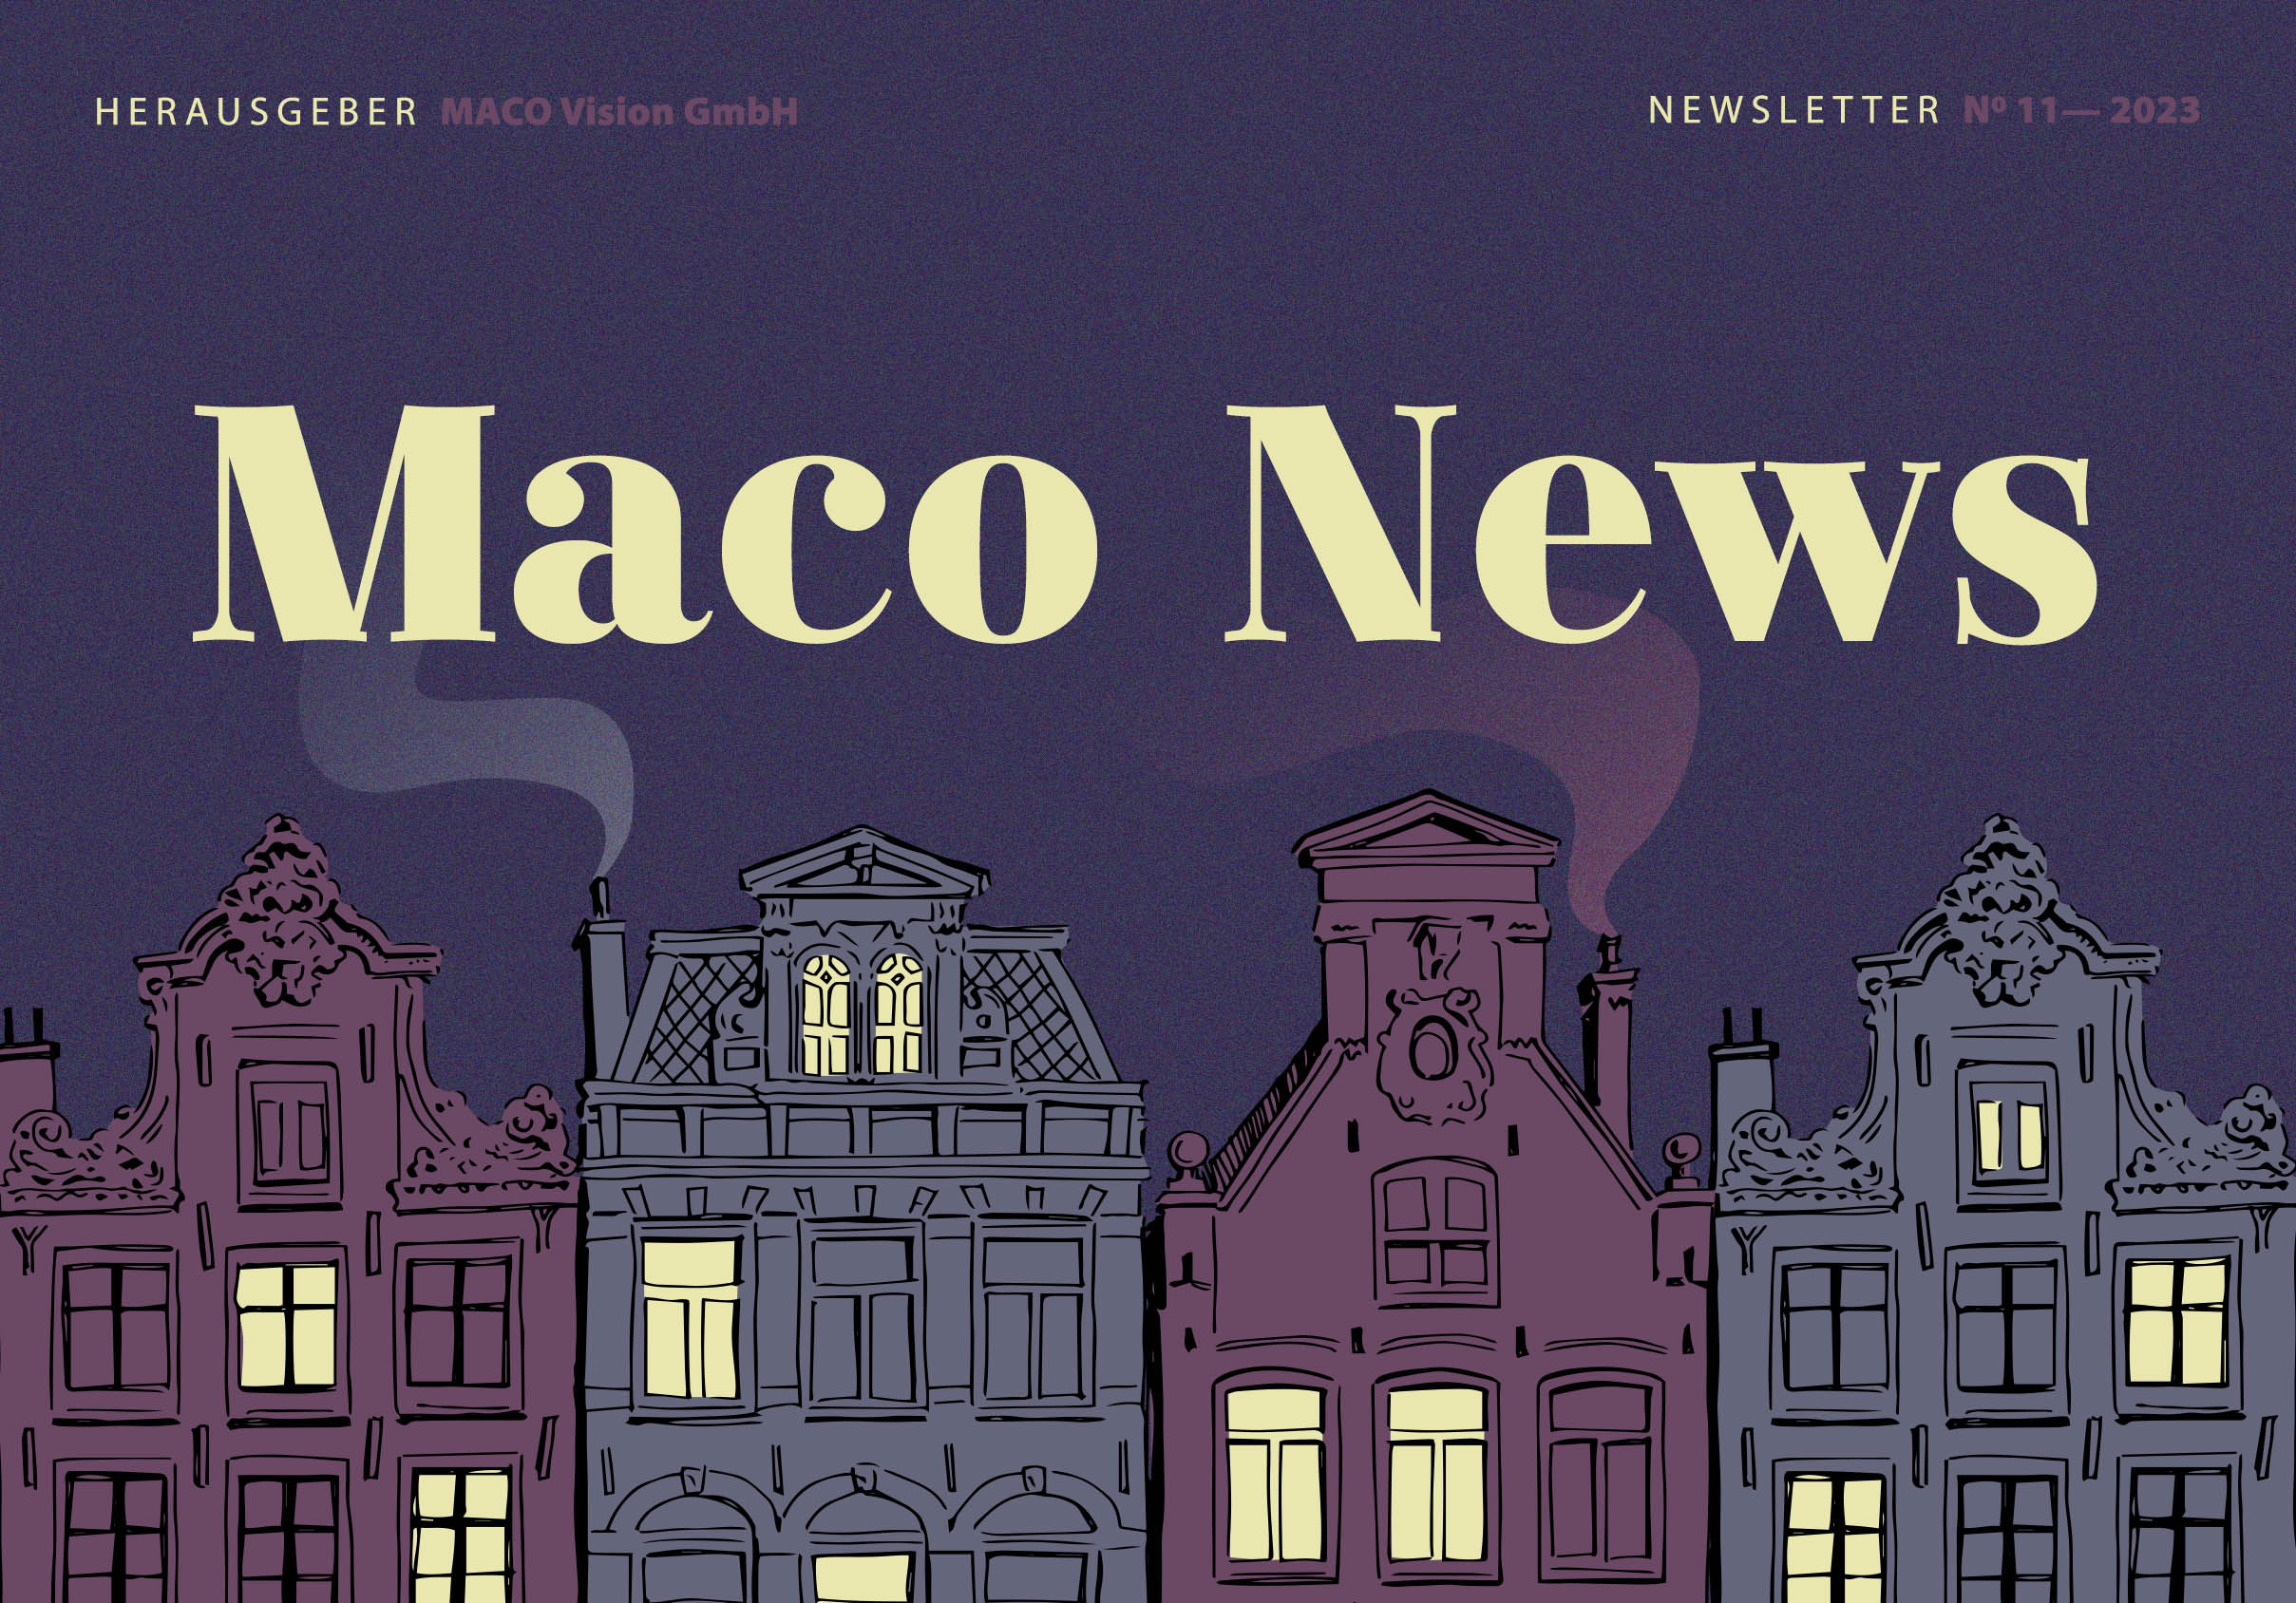 MACO News November 2023